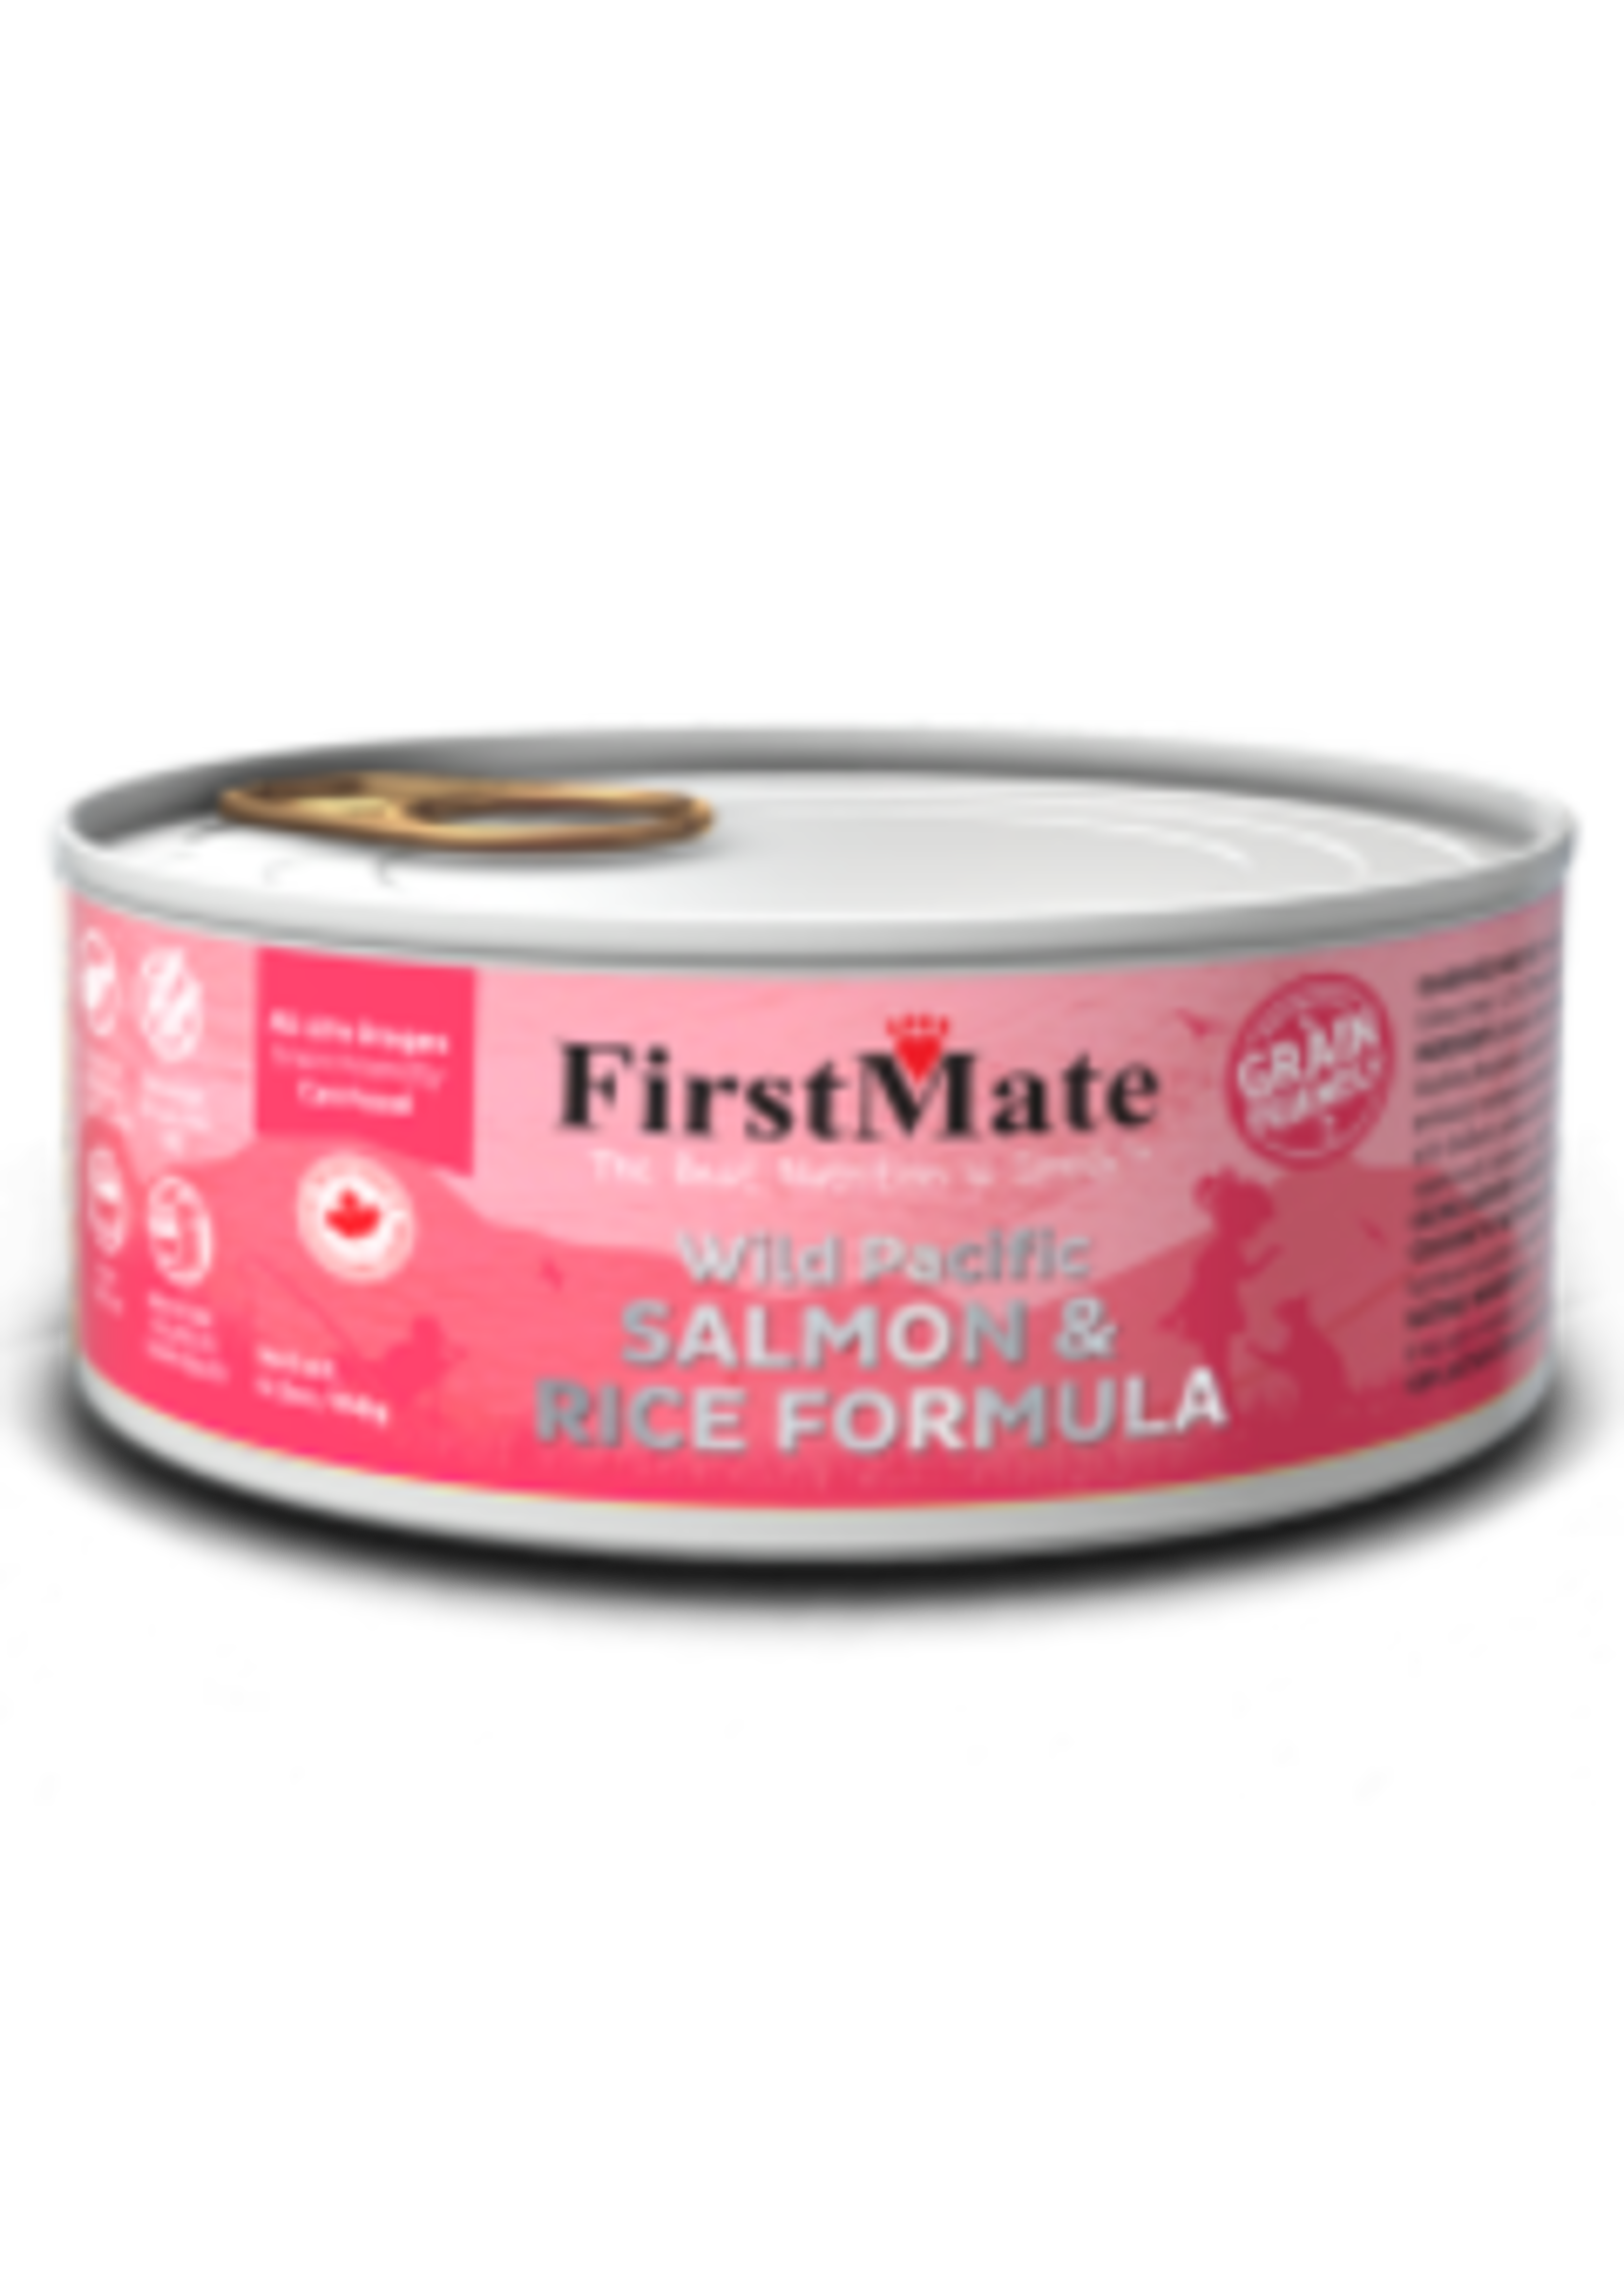 FirstMate FirstMate -GFriendly Wild Salmon/Rice Cat 5.5oz